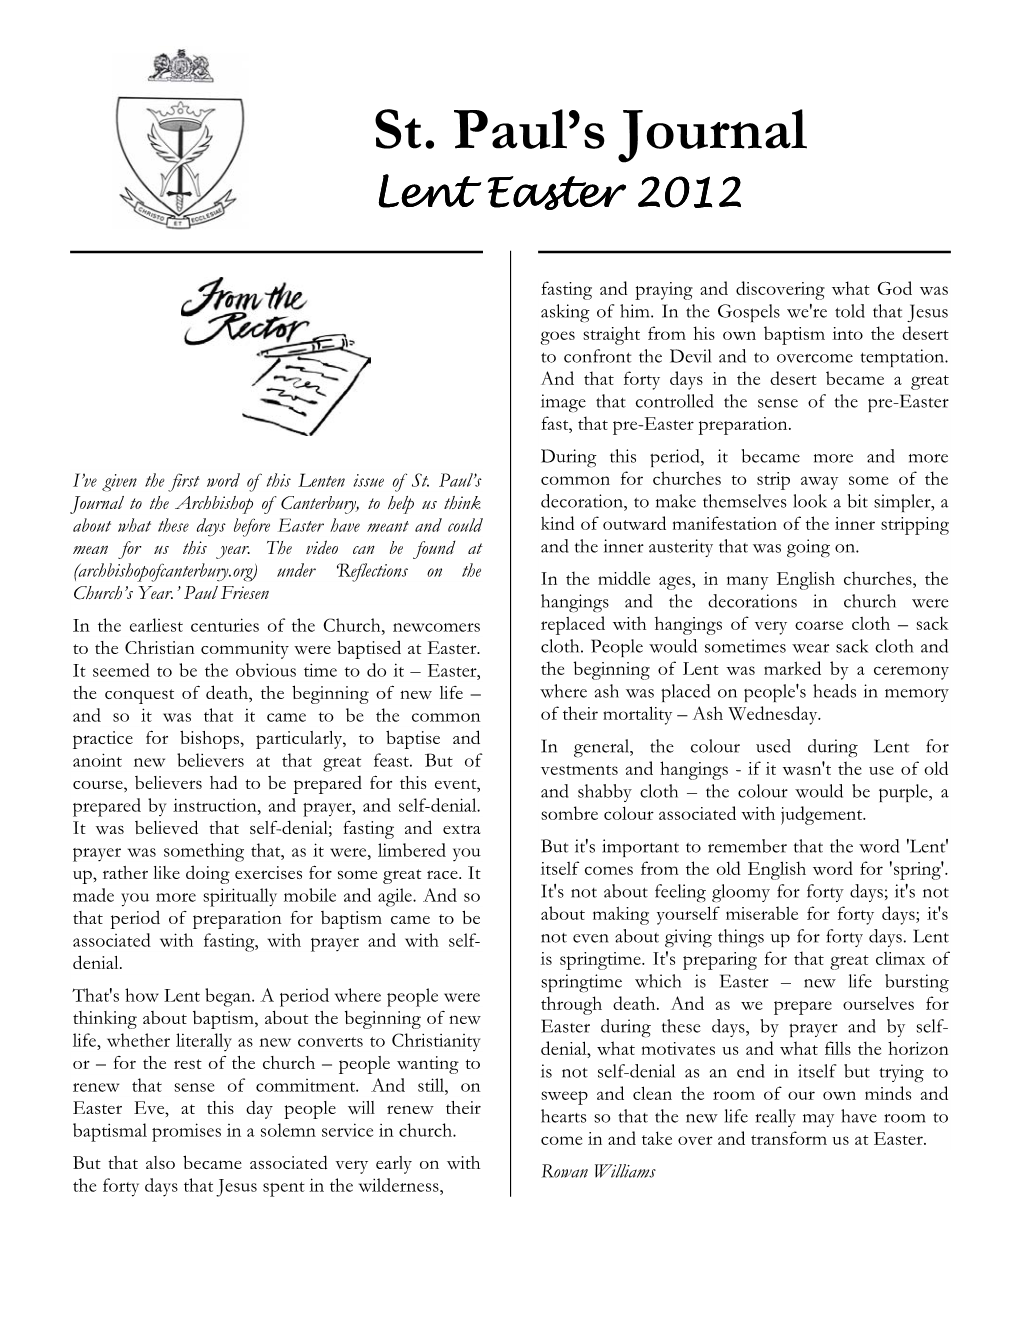 2012 Lent Easter